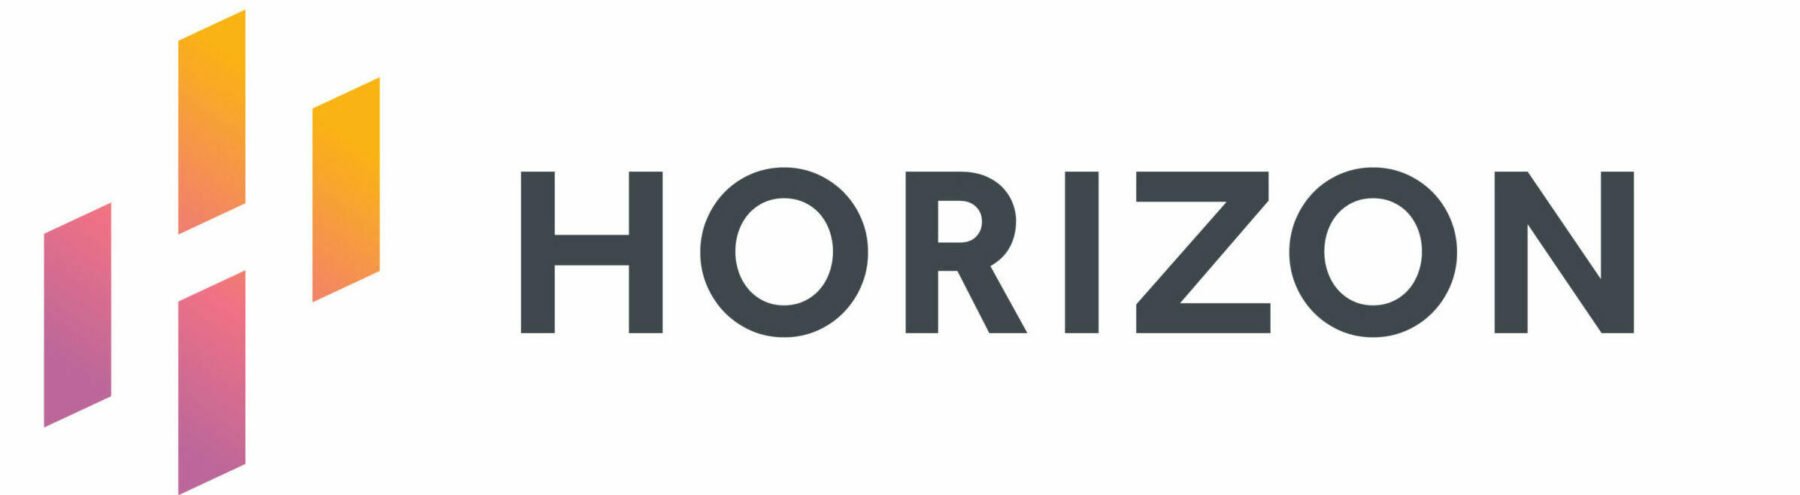 Horizon-Therapeutics-Color-Logo-scaled-e1632938419306.jpeg